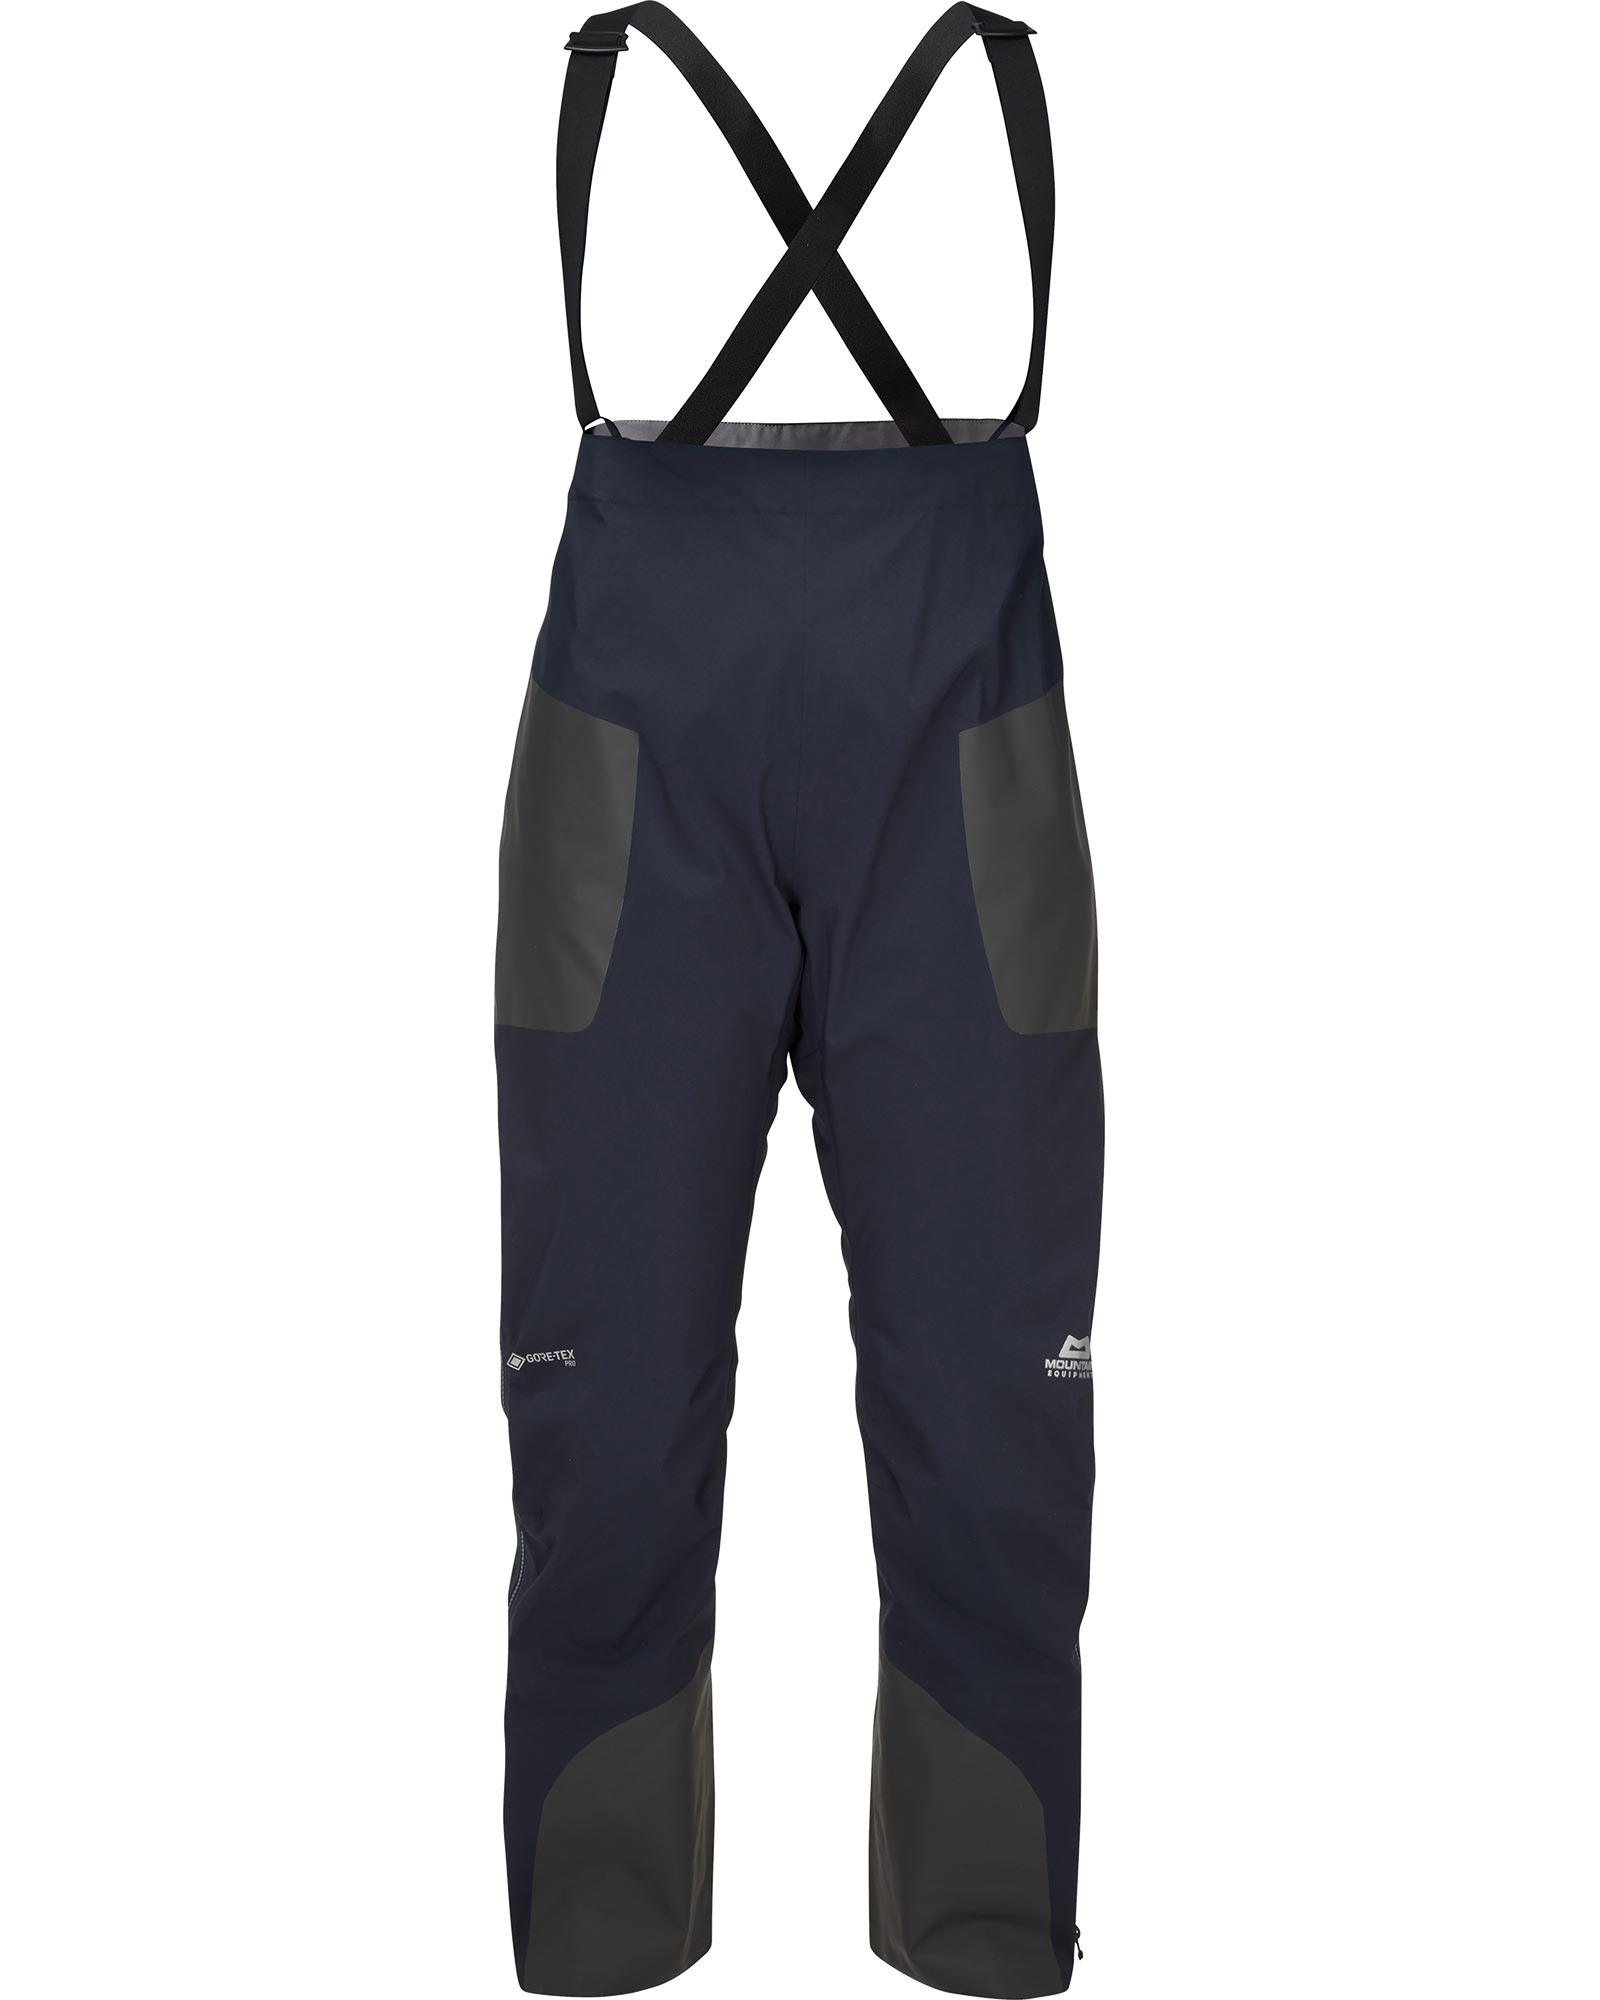 Mountain Equipment Tupilak GORE TEX Pro Women’s Pants - Cosmos 14